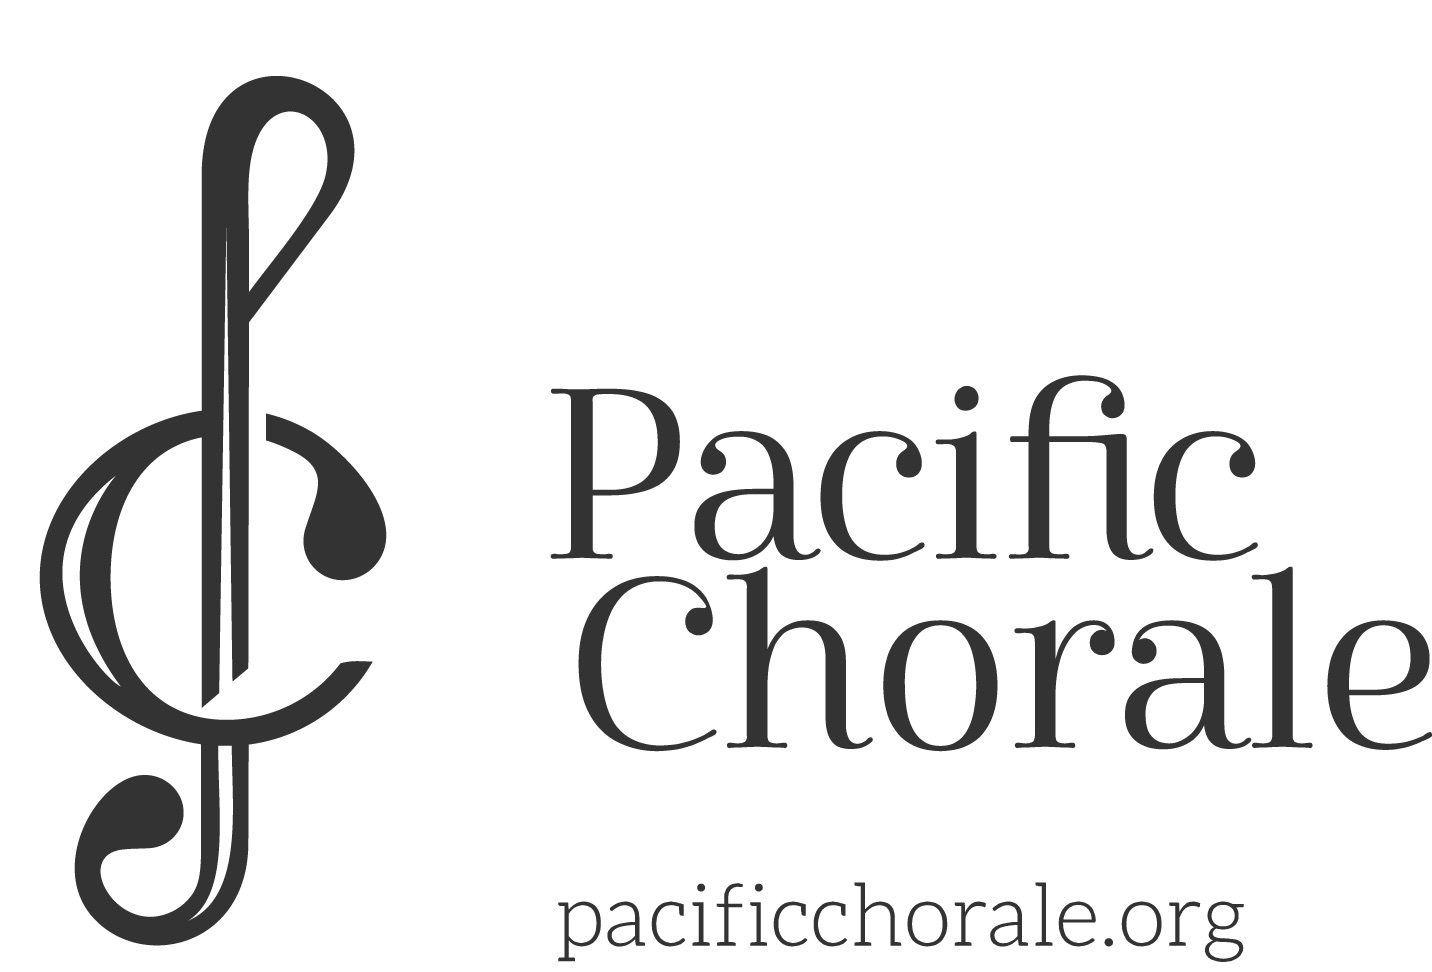 Chorale Logo - Pacific Chorale Education & Community Programs